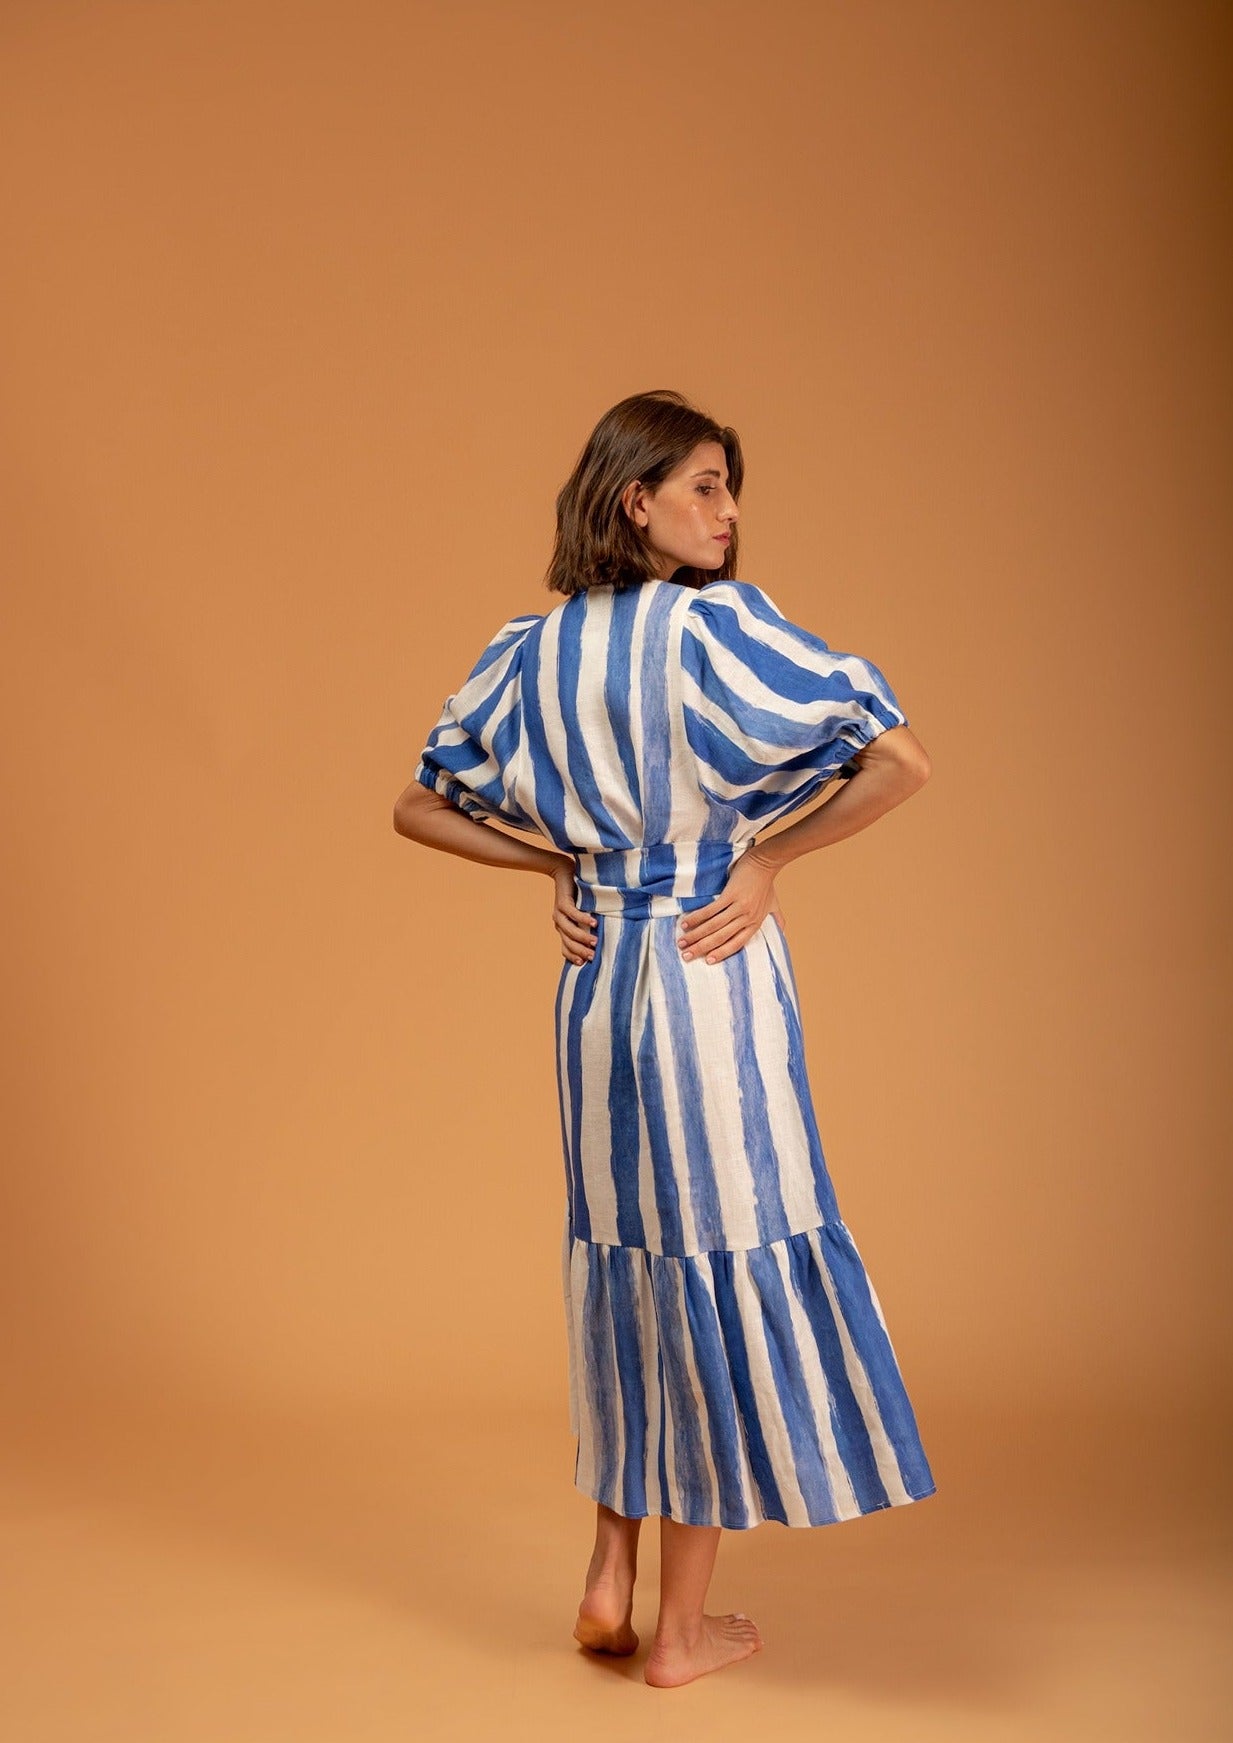 Galeria-Urca Blue Stripes Dress-Justbrazil